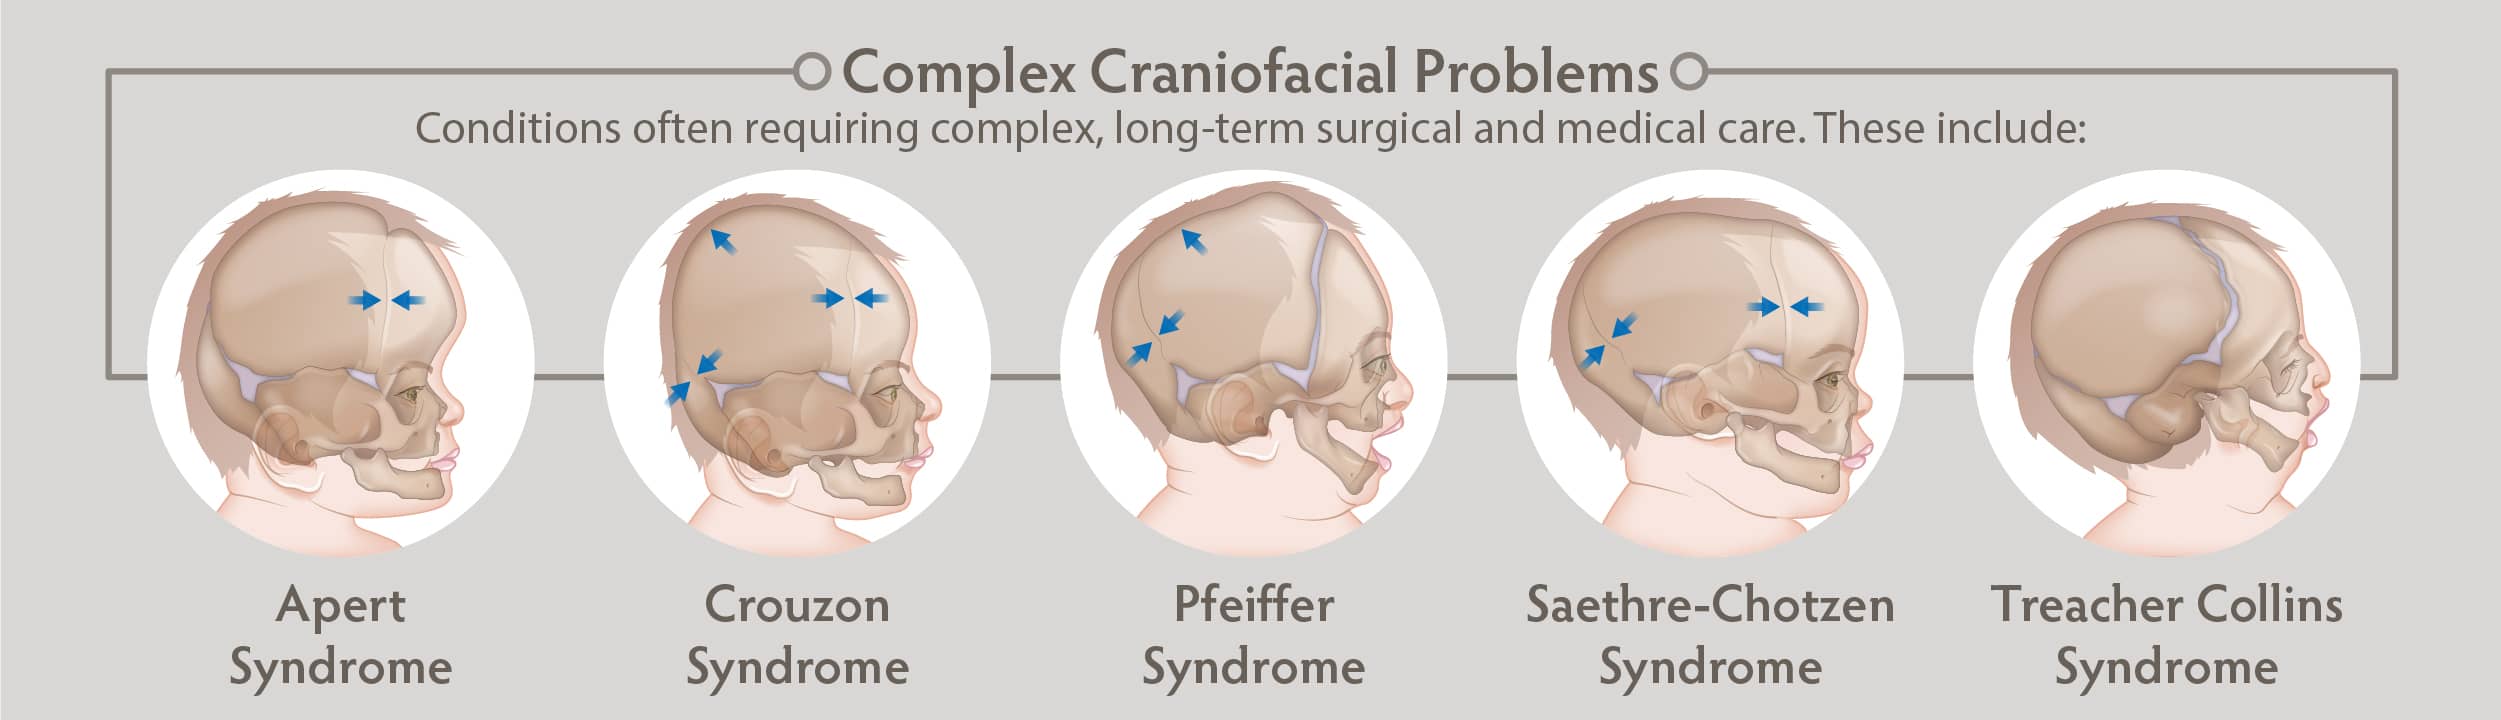 complex craniofacial problems